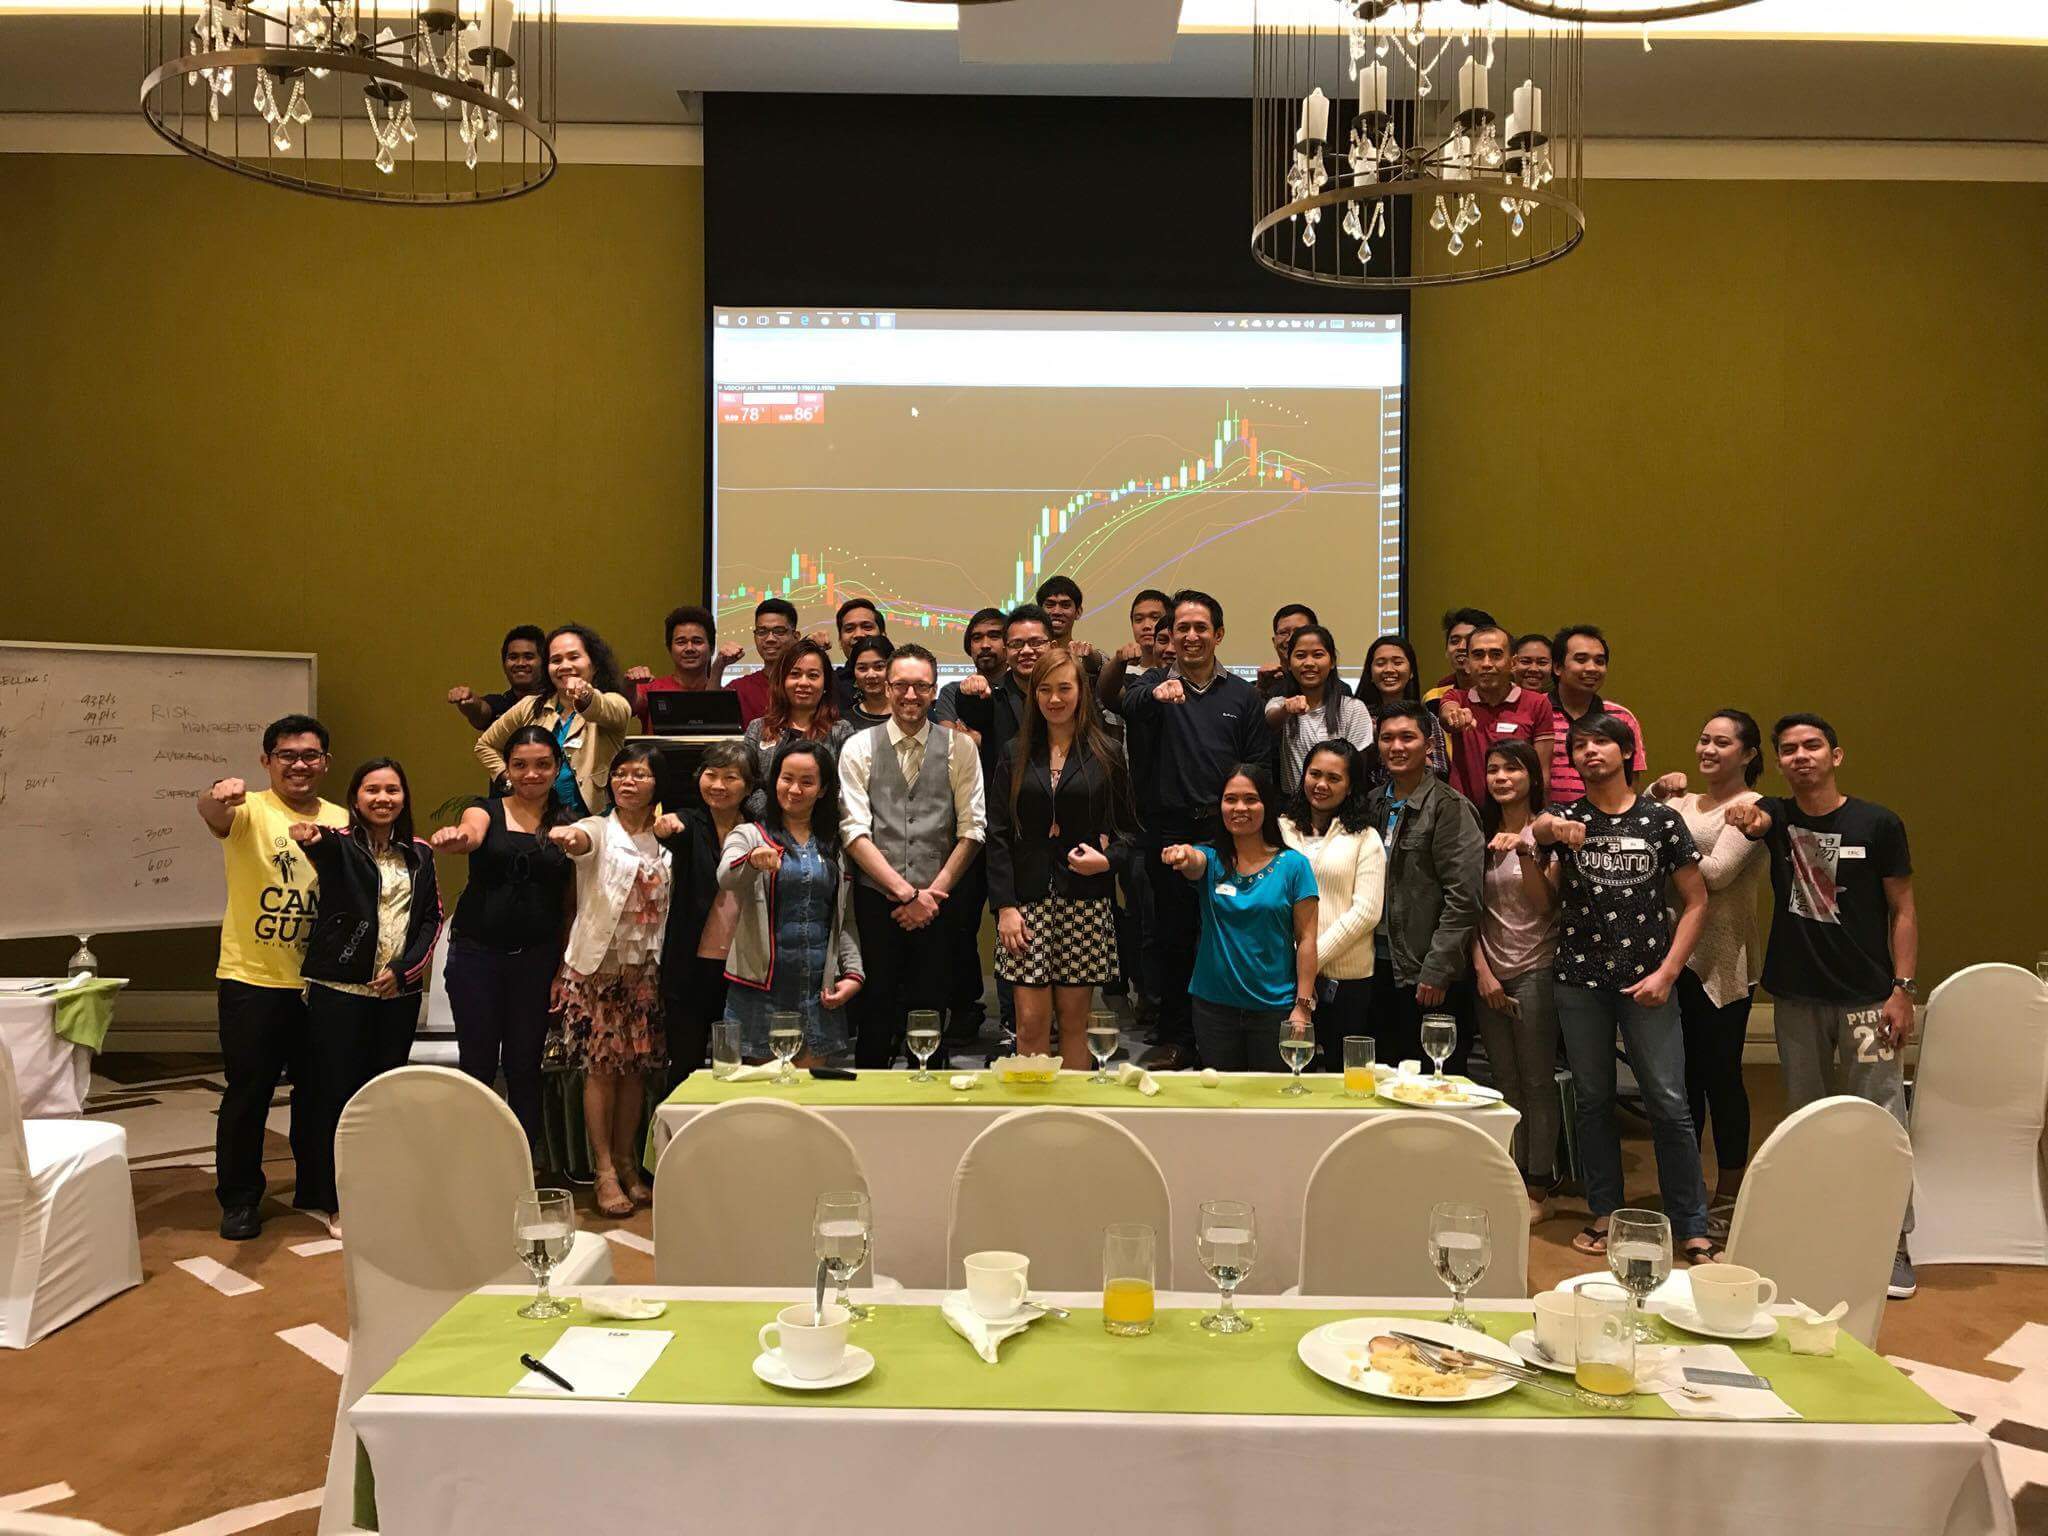 Forex trading philippines seminar